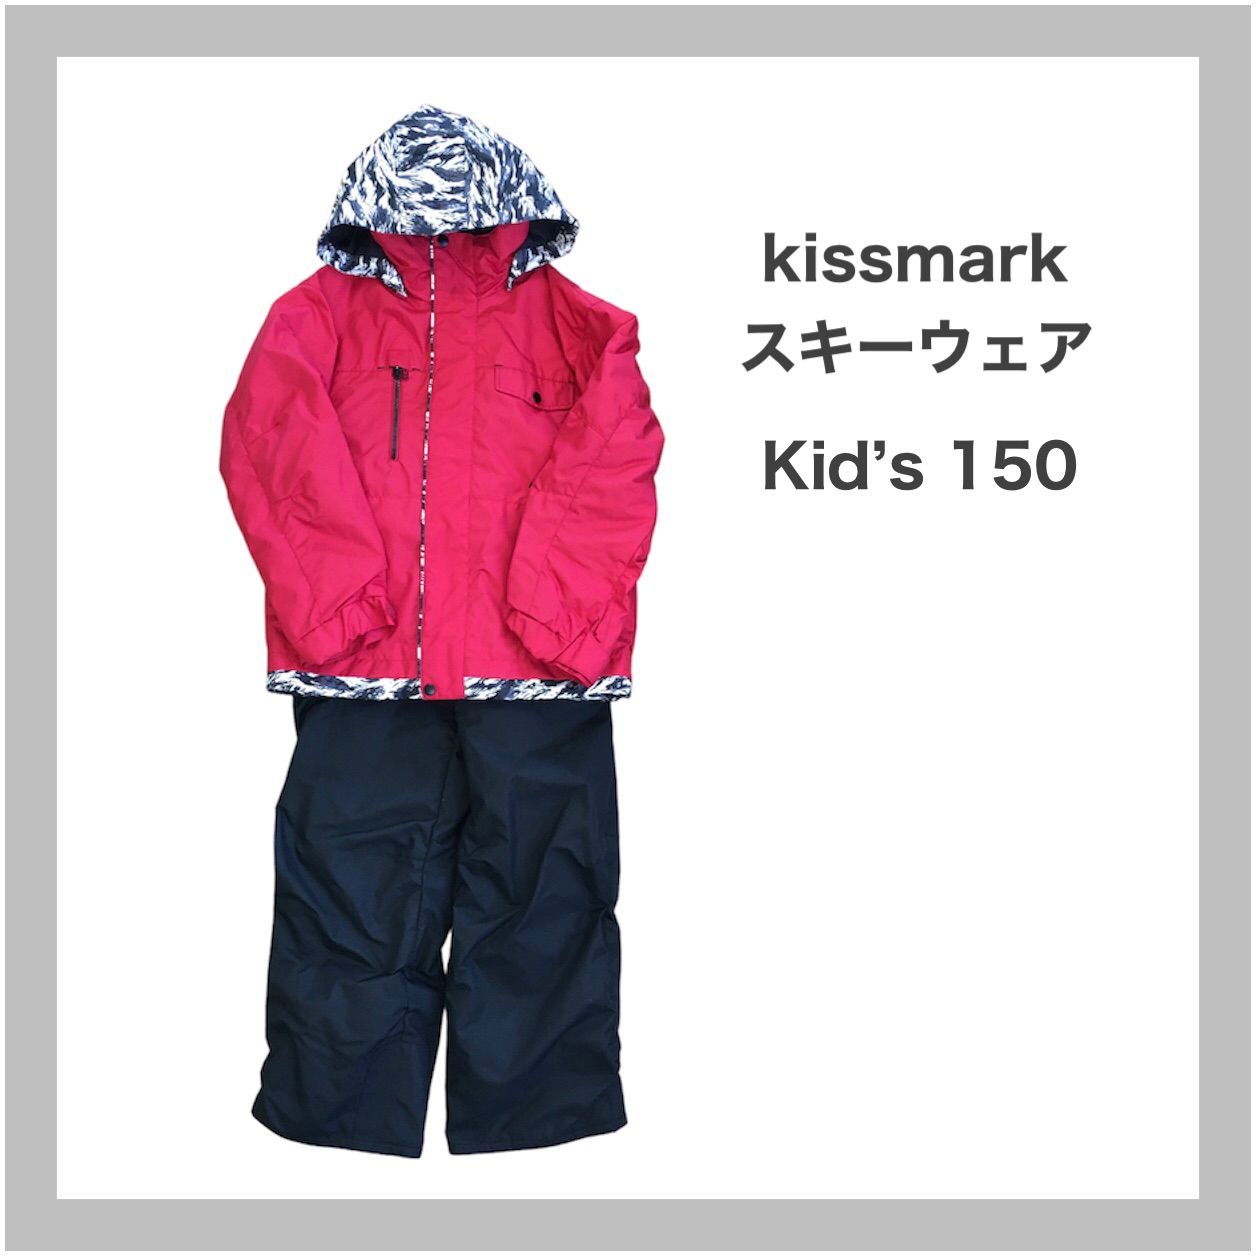 kissmark キスマーク スキーウェア スノーウェア セット スノボ 150 ...